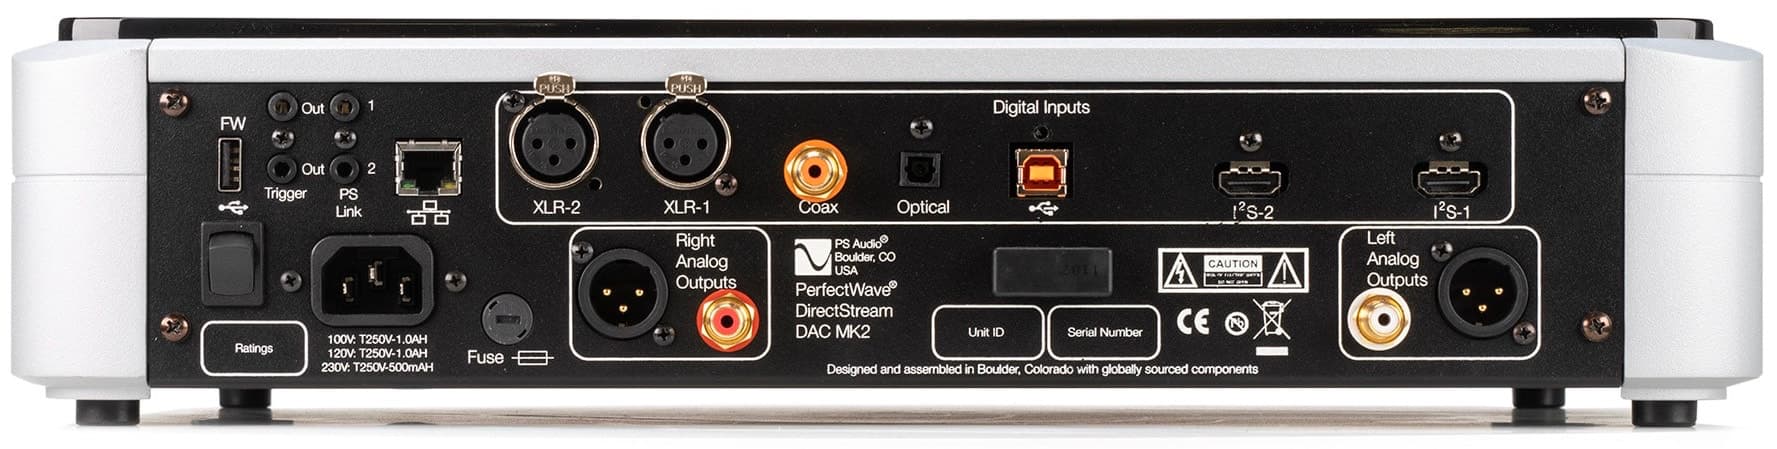 PS Audio PerfectWave DirectStream DAC MK2 Rear